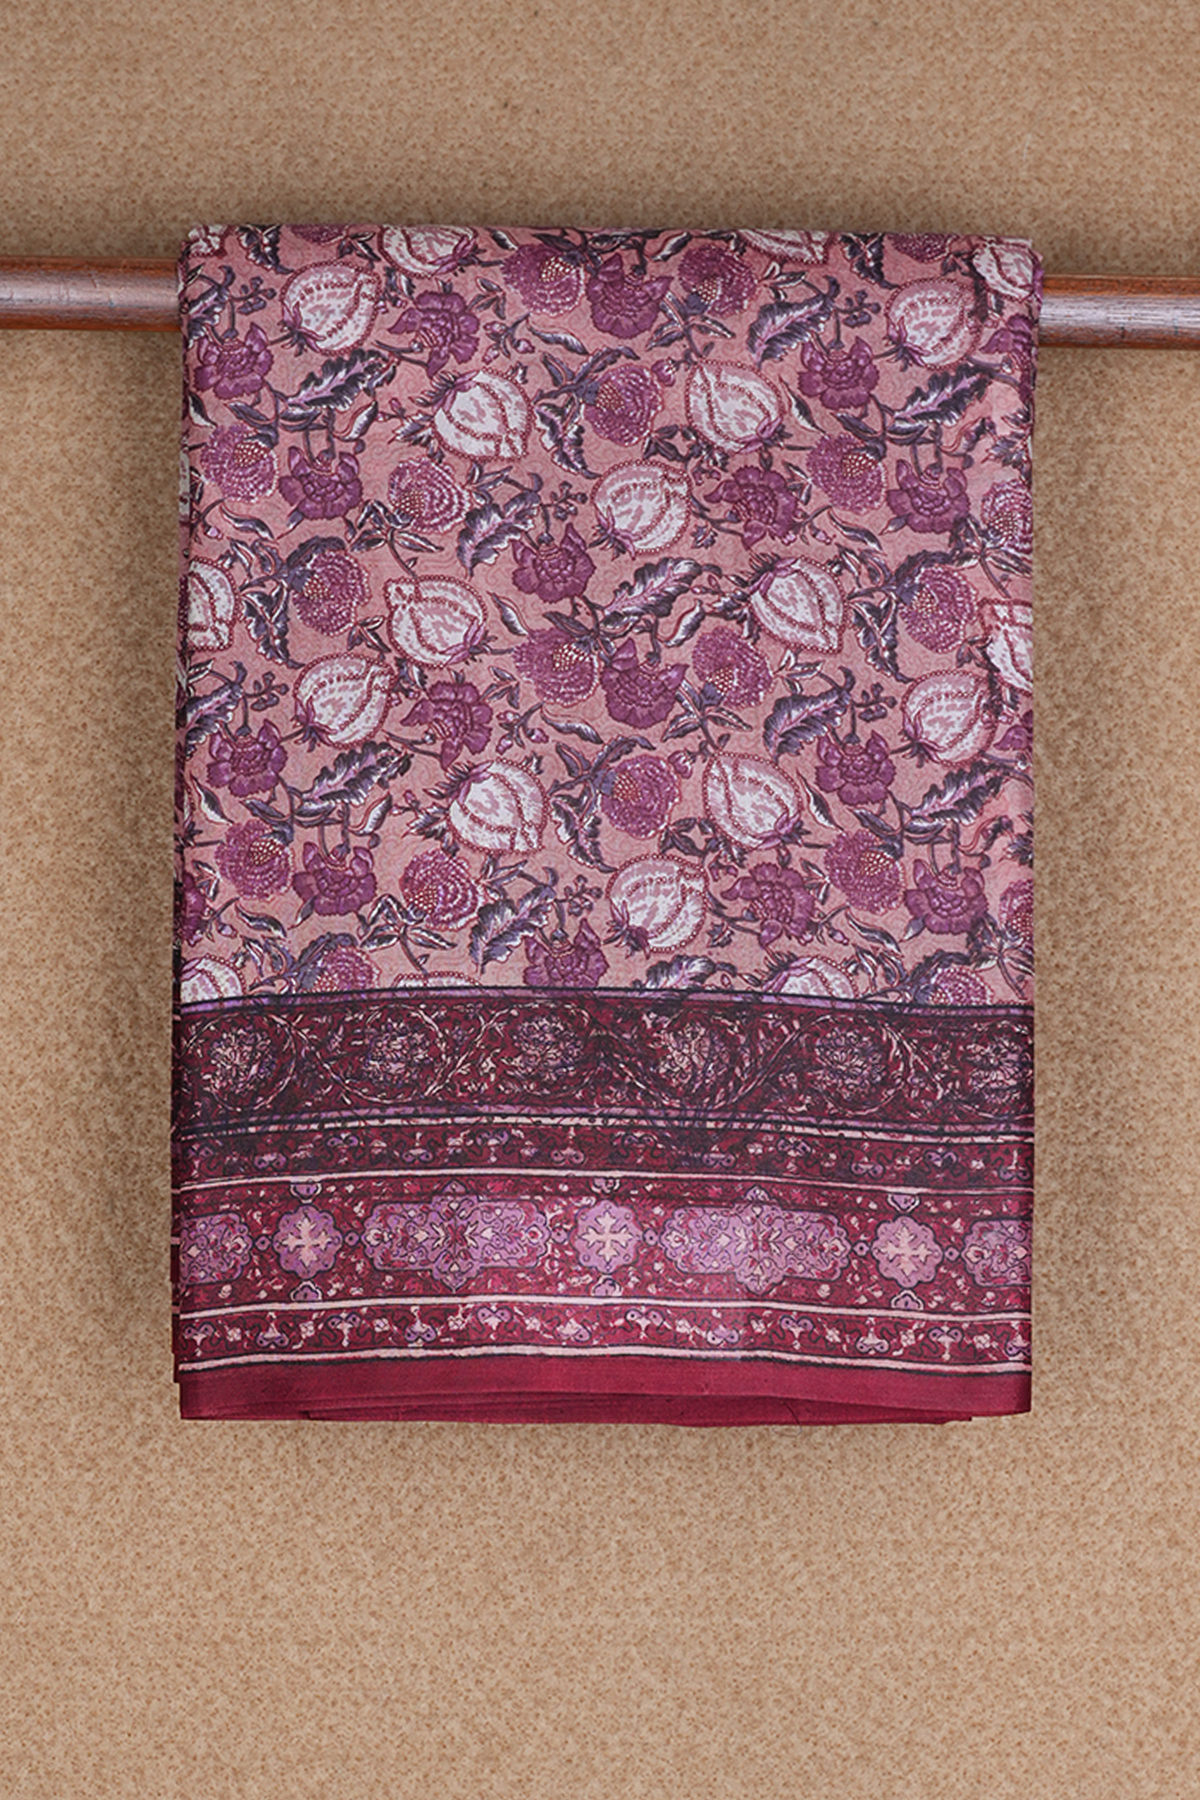 Allover Floral Design Soft Blush Pink Printed Silk Saree